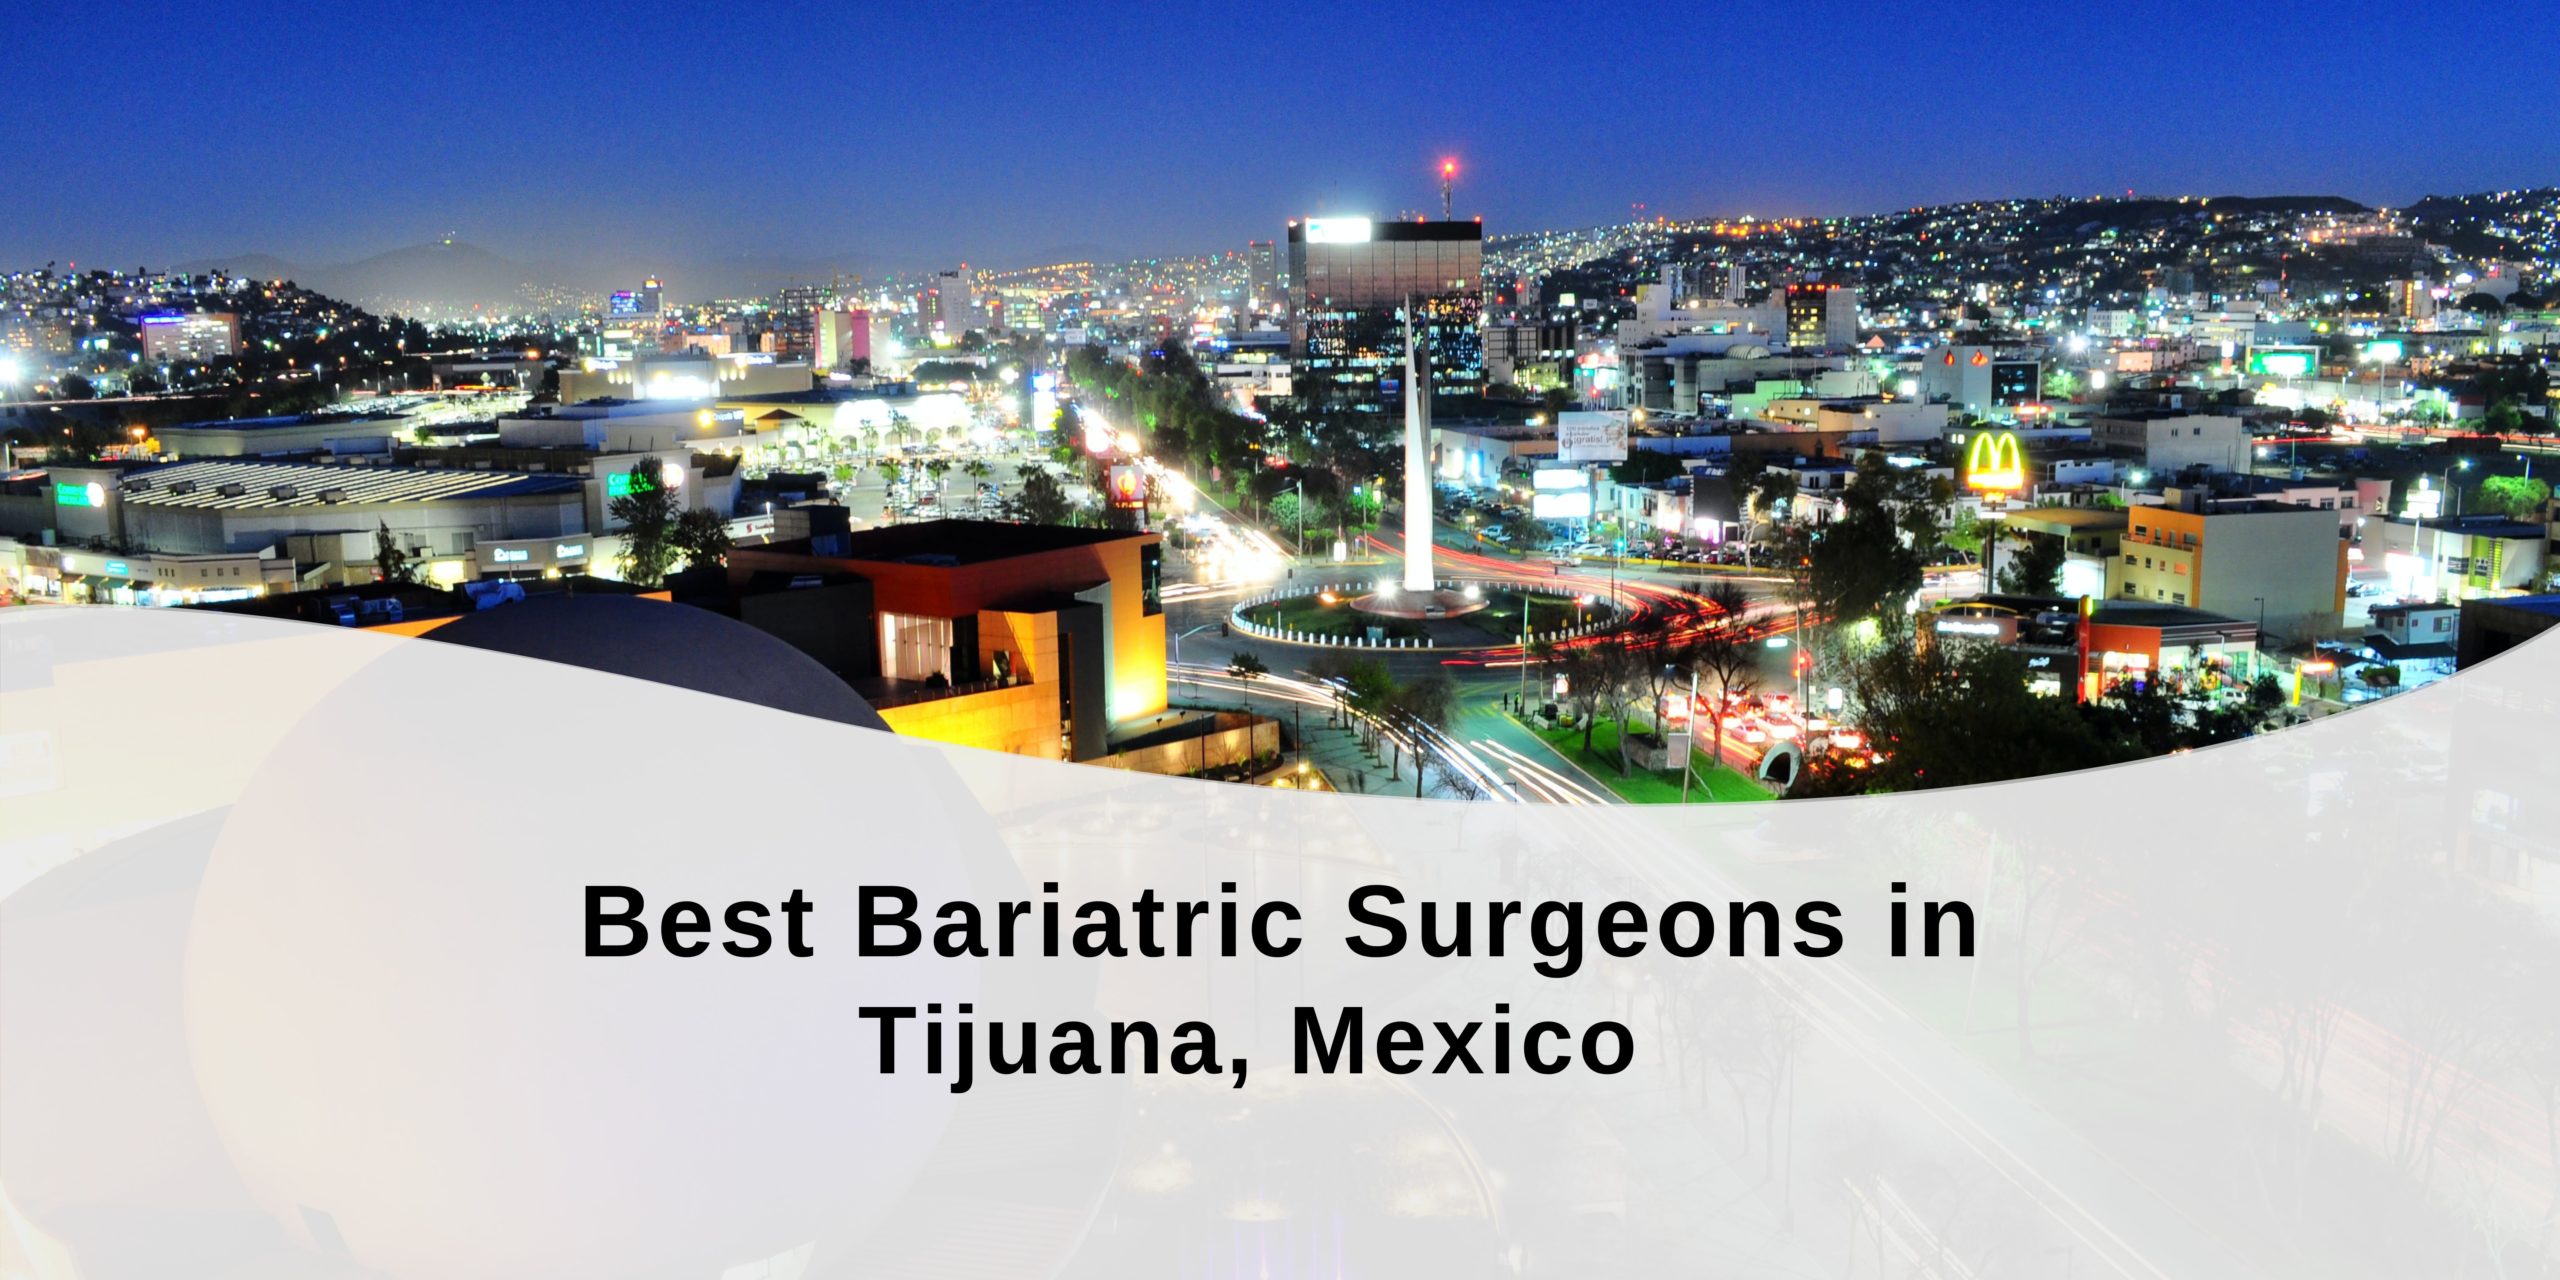 Best Bariatric Surgeons in Tijuana, Mexico